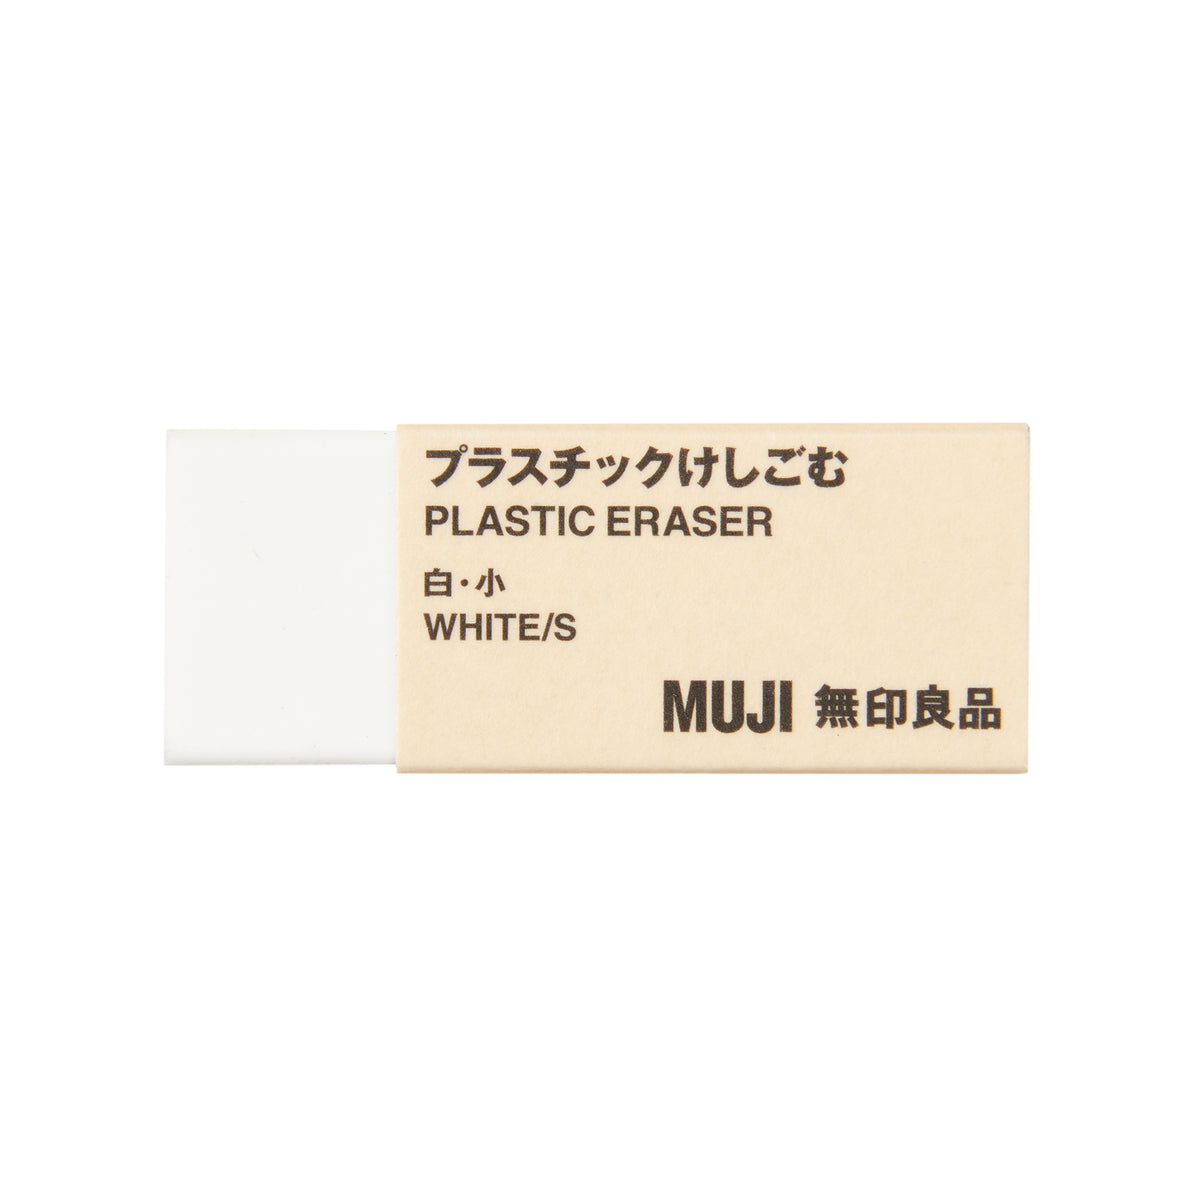 Eraser Products